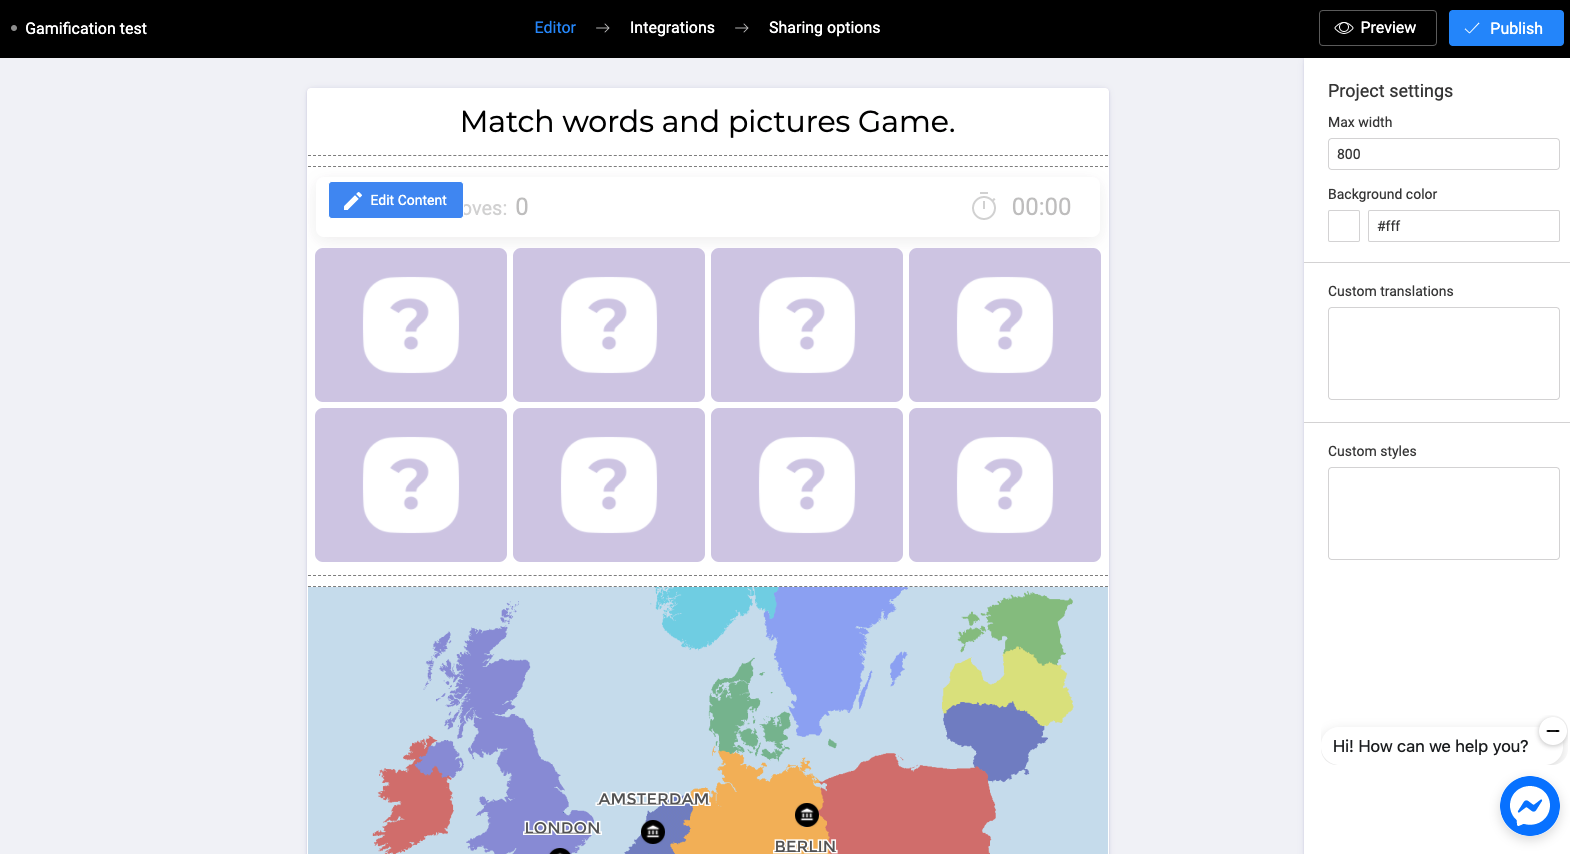 Editor - main view (memory game and interactive map visible)